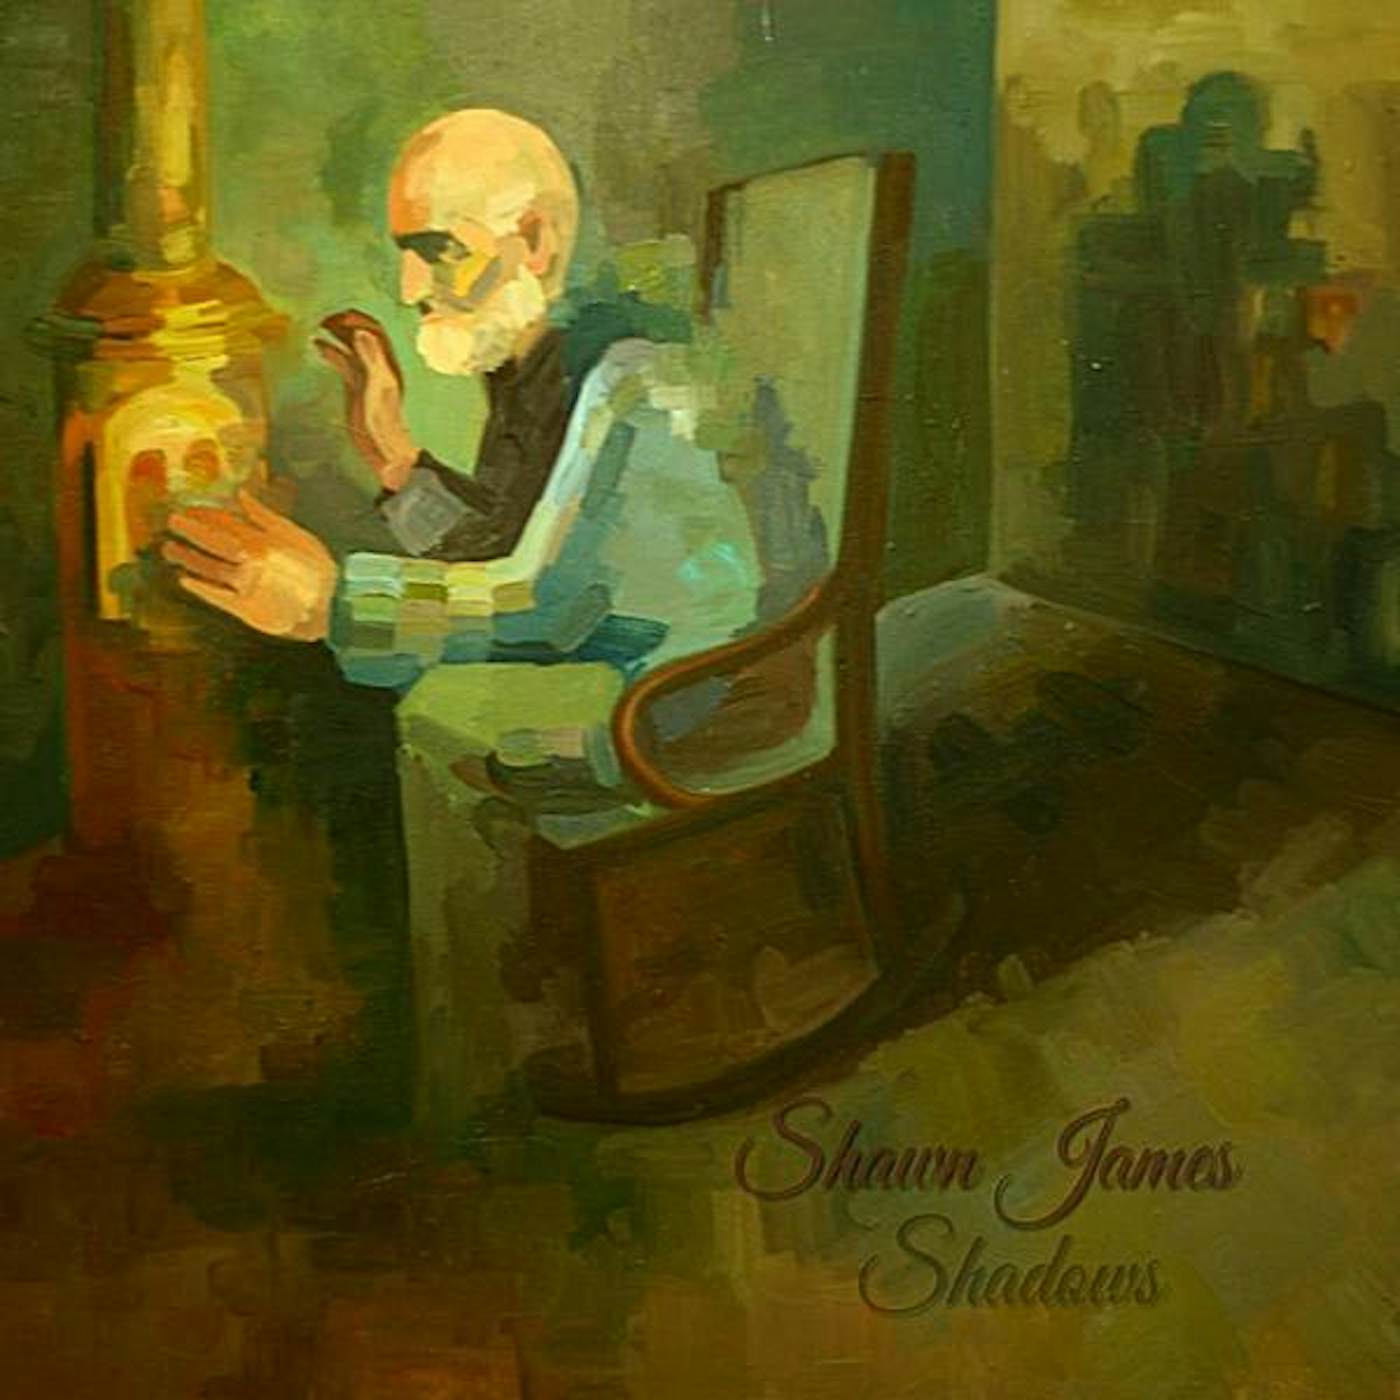 Shawn James SHADOWS CD